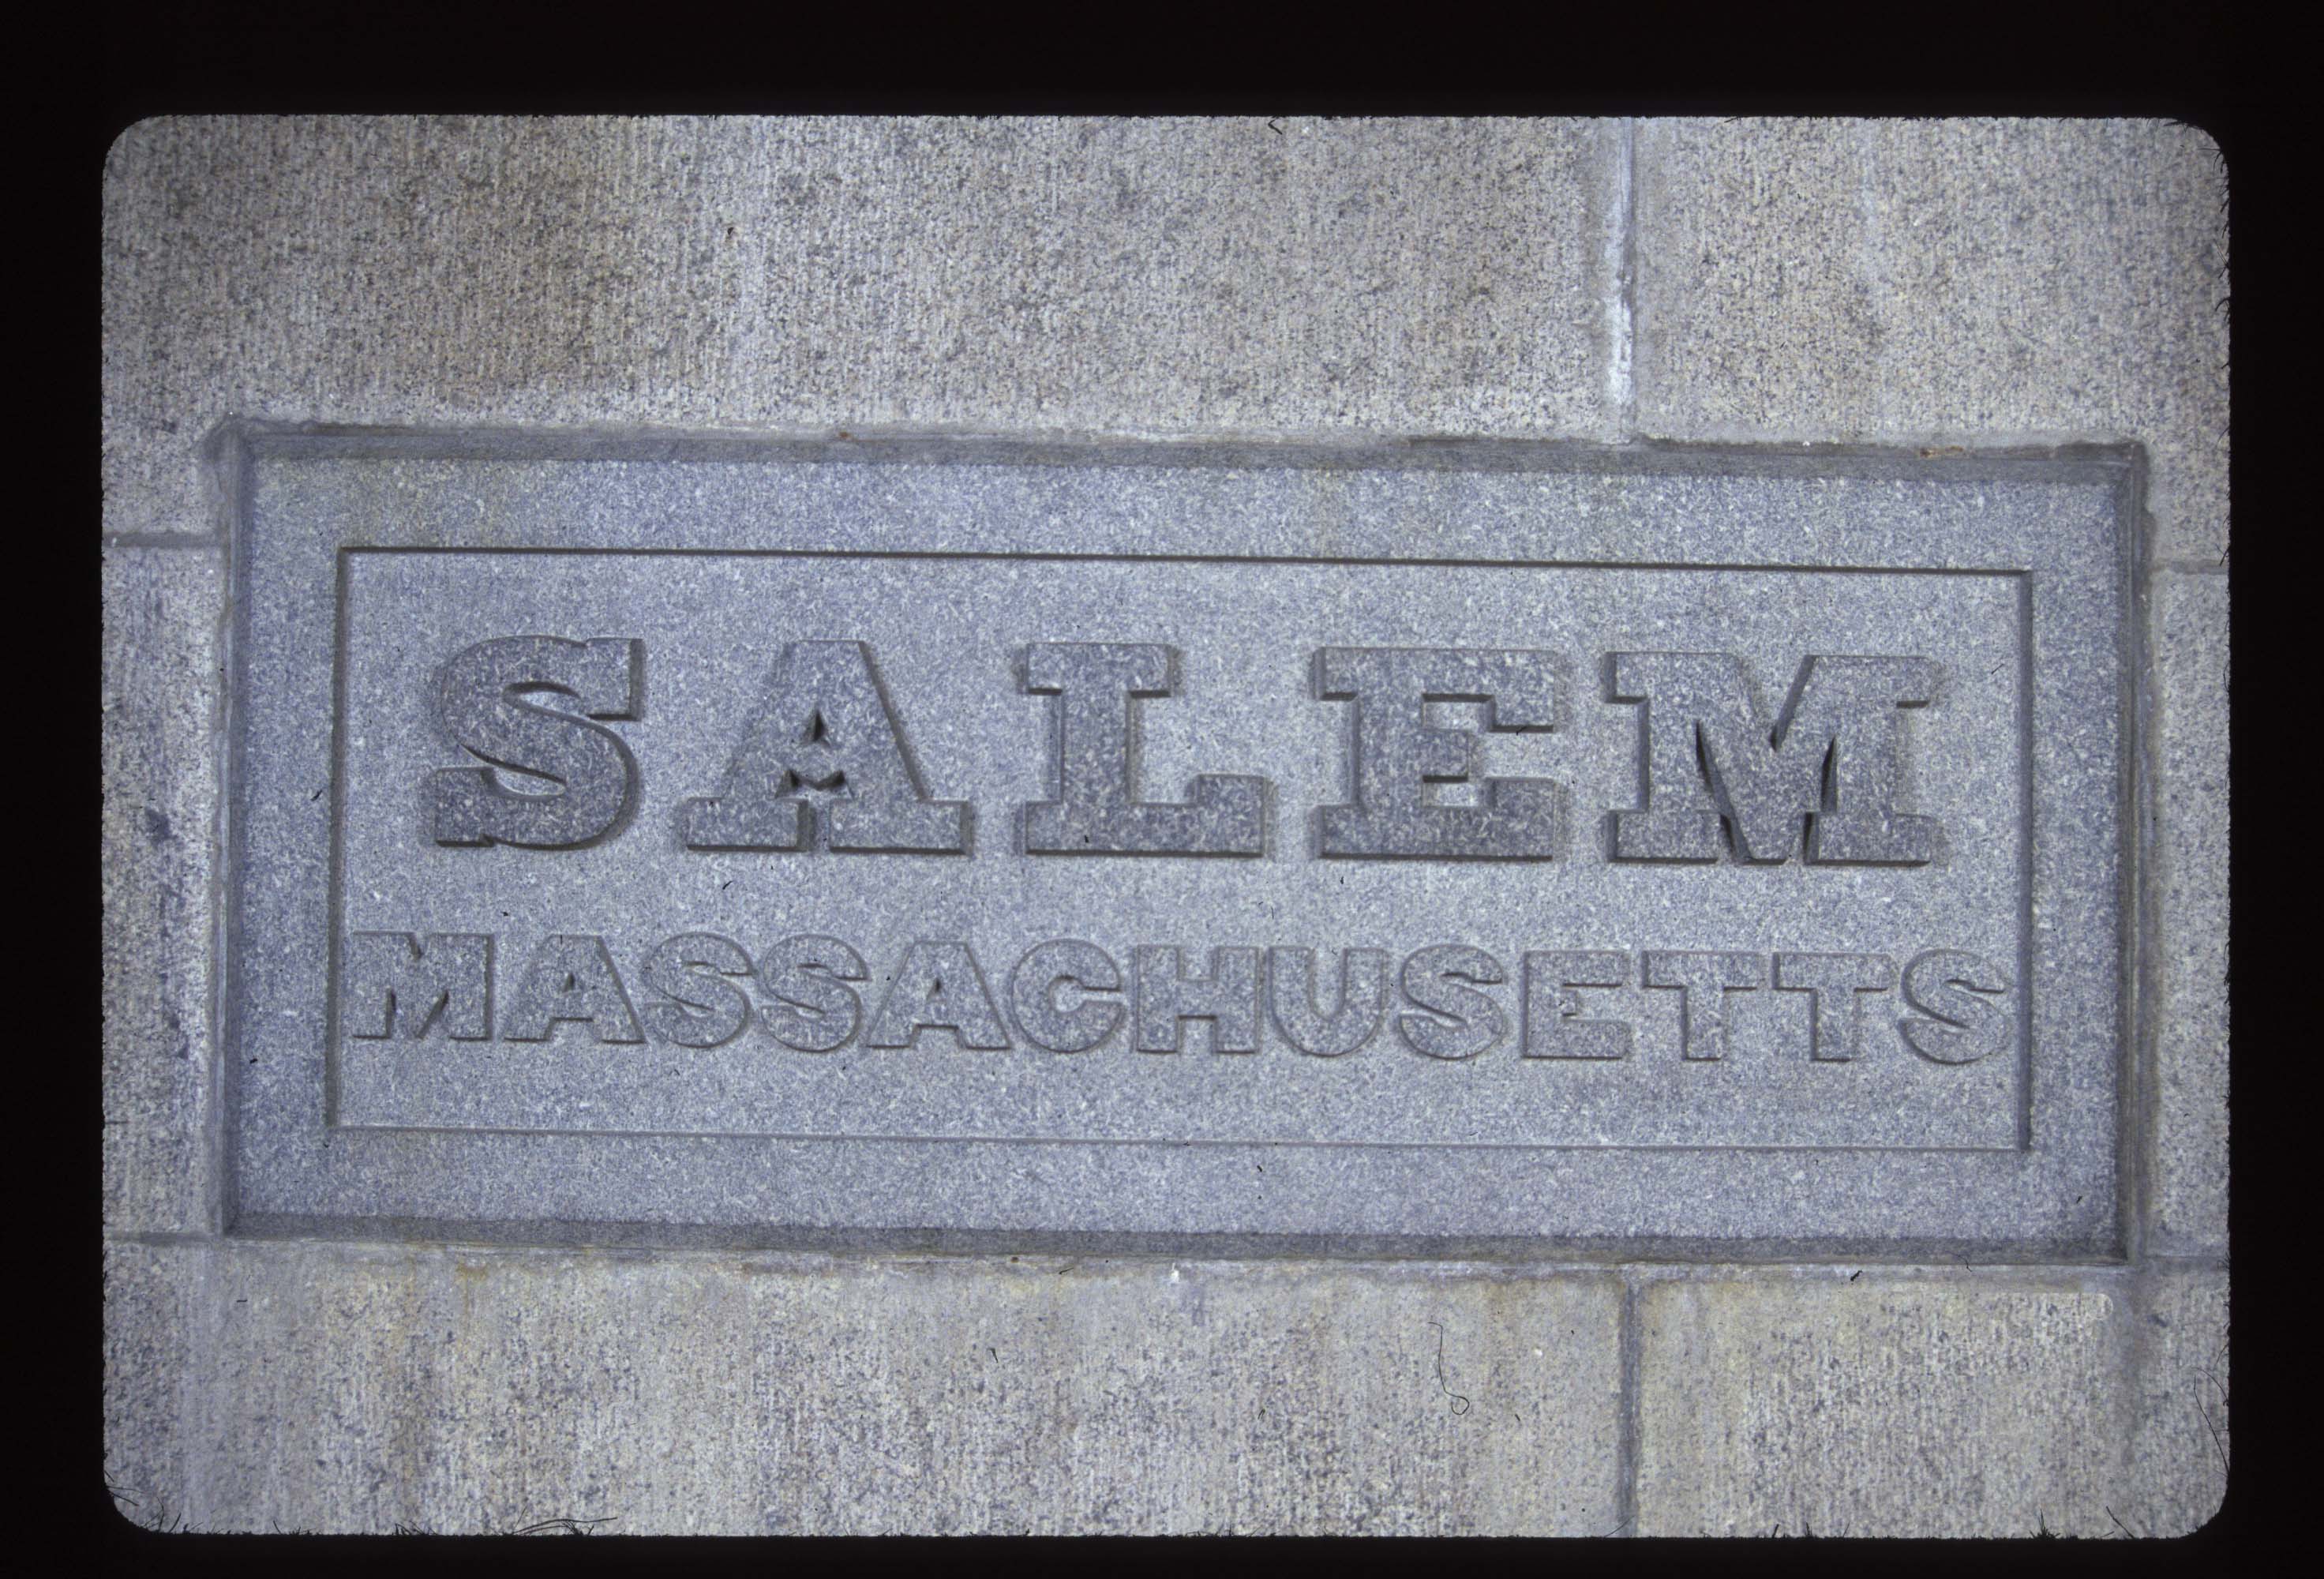 Salem Massachusetts (170' level) (U.S. National Park Service)